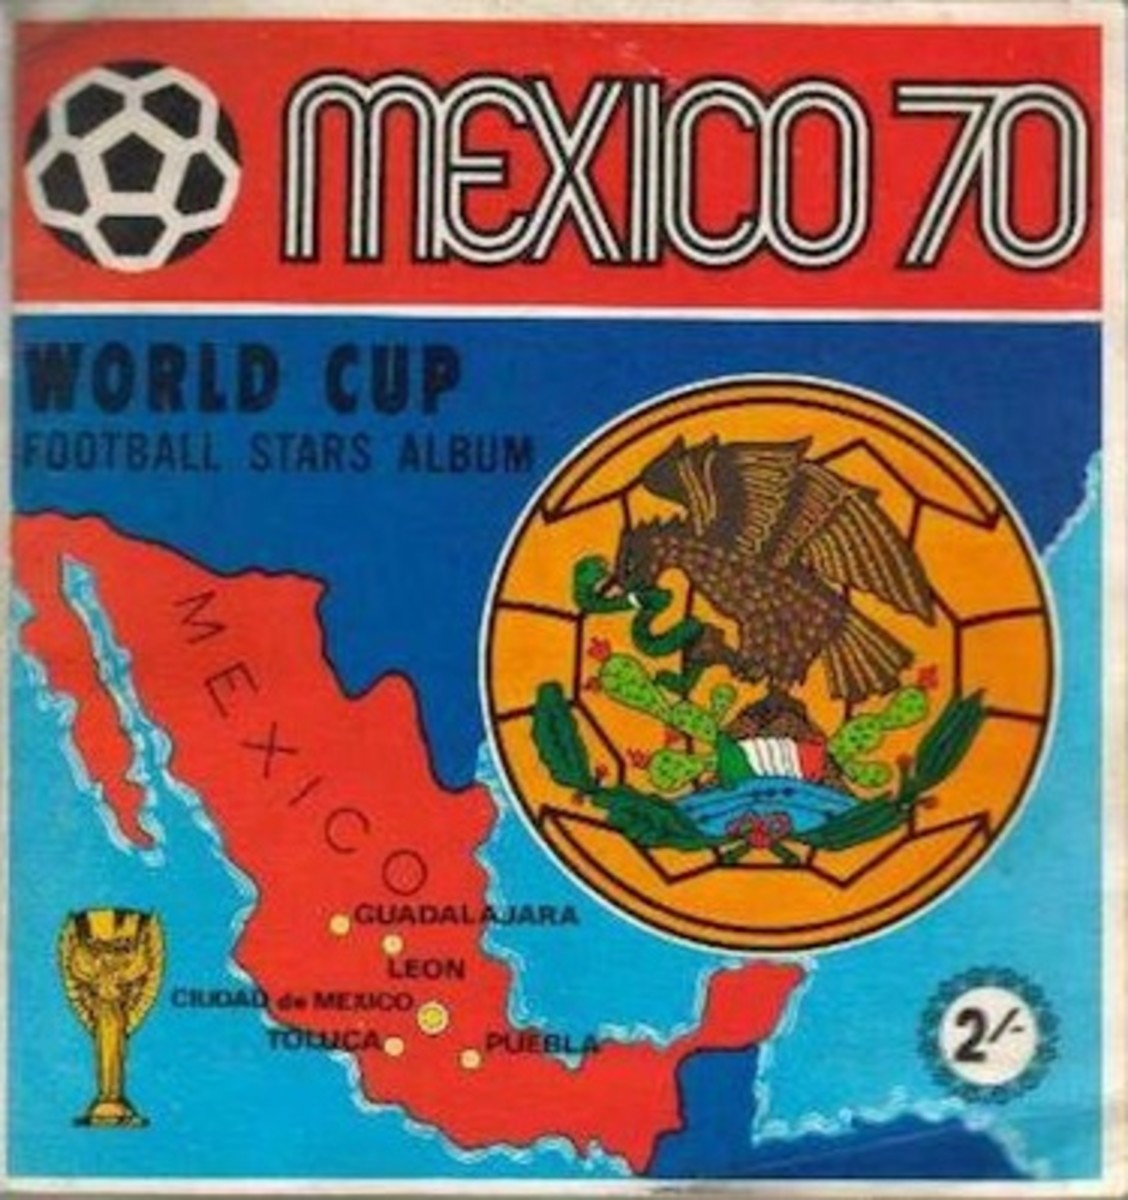 1970 Panini World Cup Sticker Album.